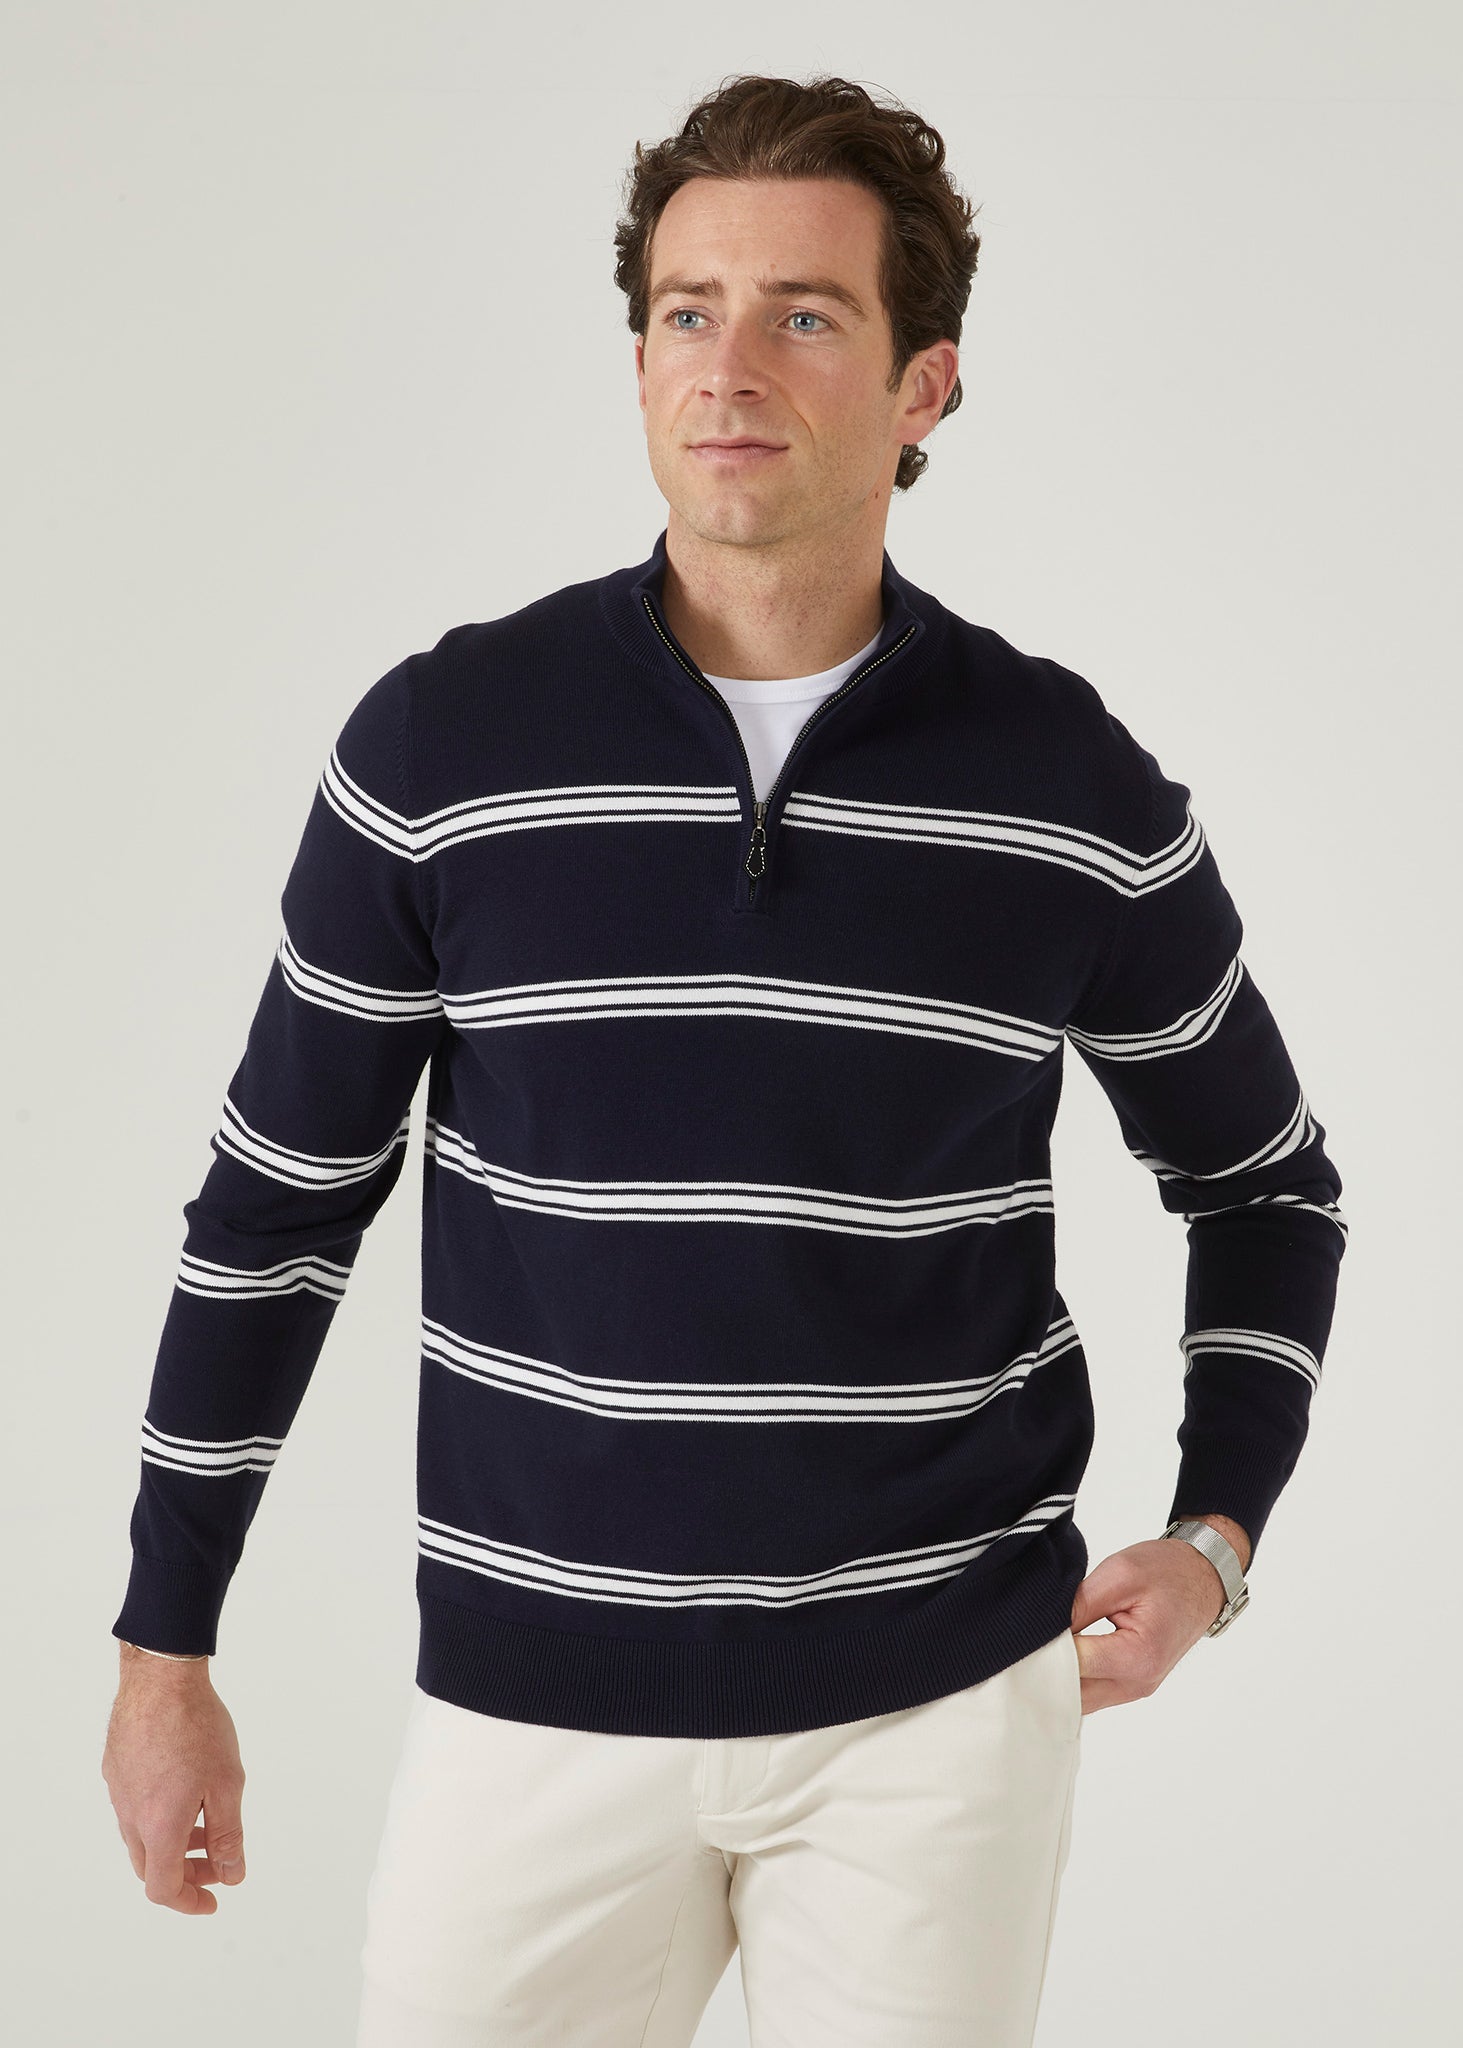 Striped mock neck jumper in dark navy with ecru stripe.